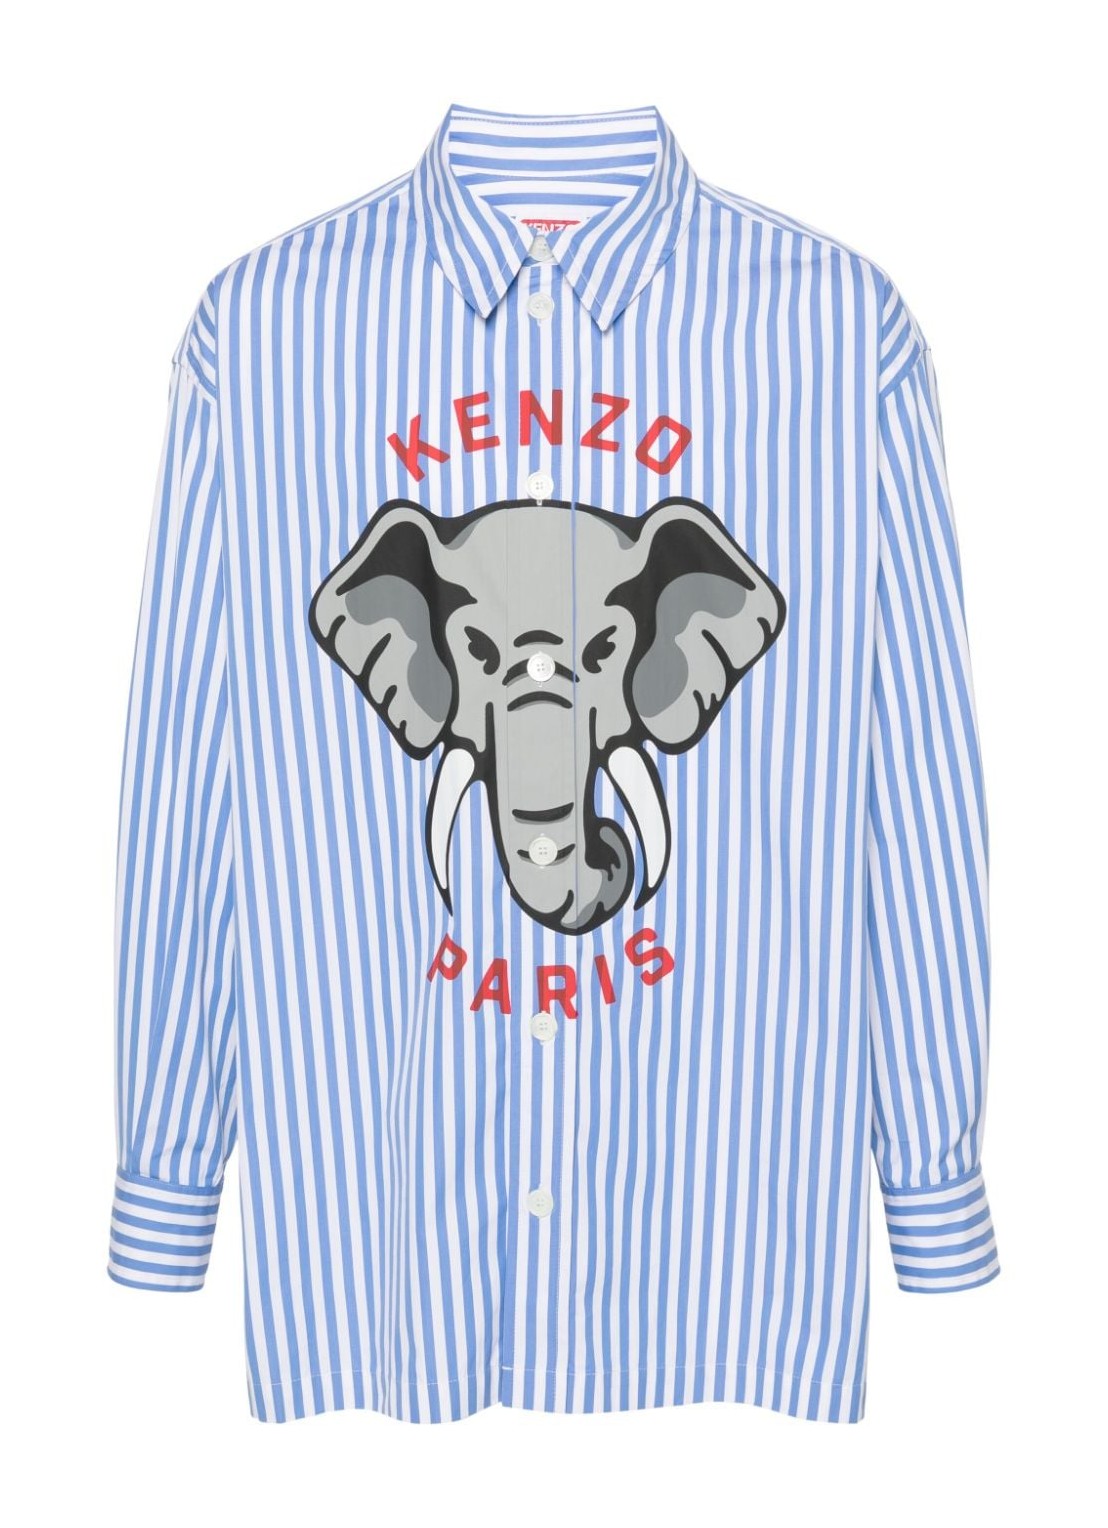 Camiseria kenzo shirt man kenzo elephant oversized shirt fe55ch5109lm 71 talla L
 